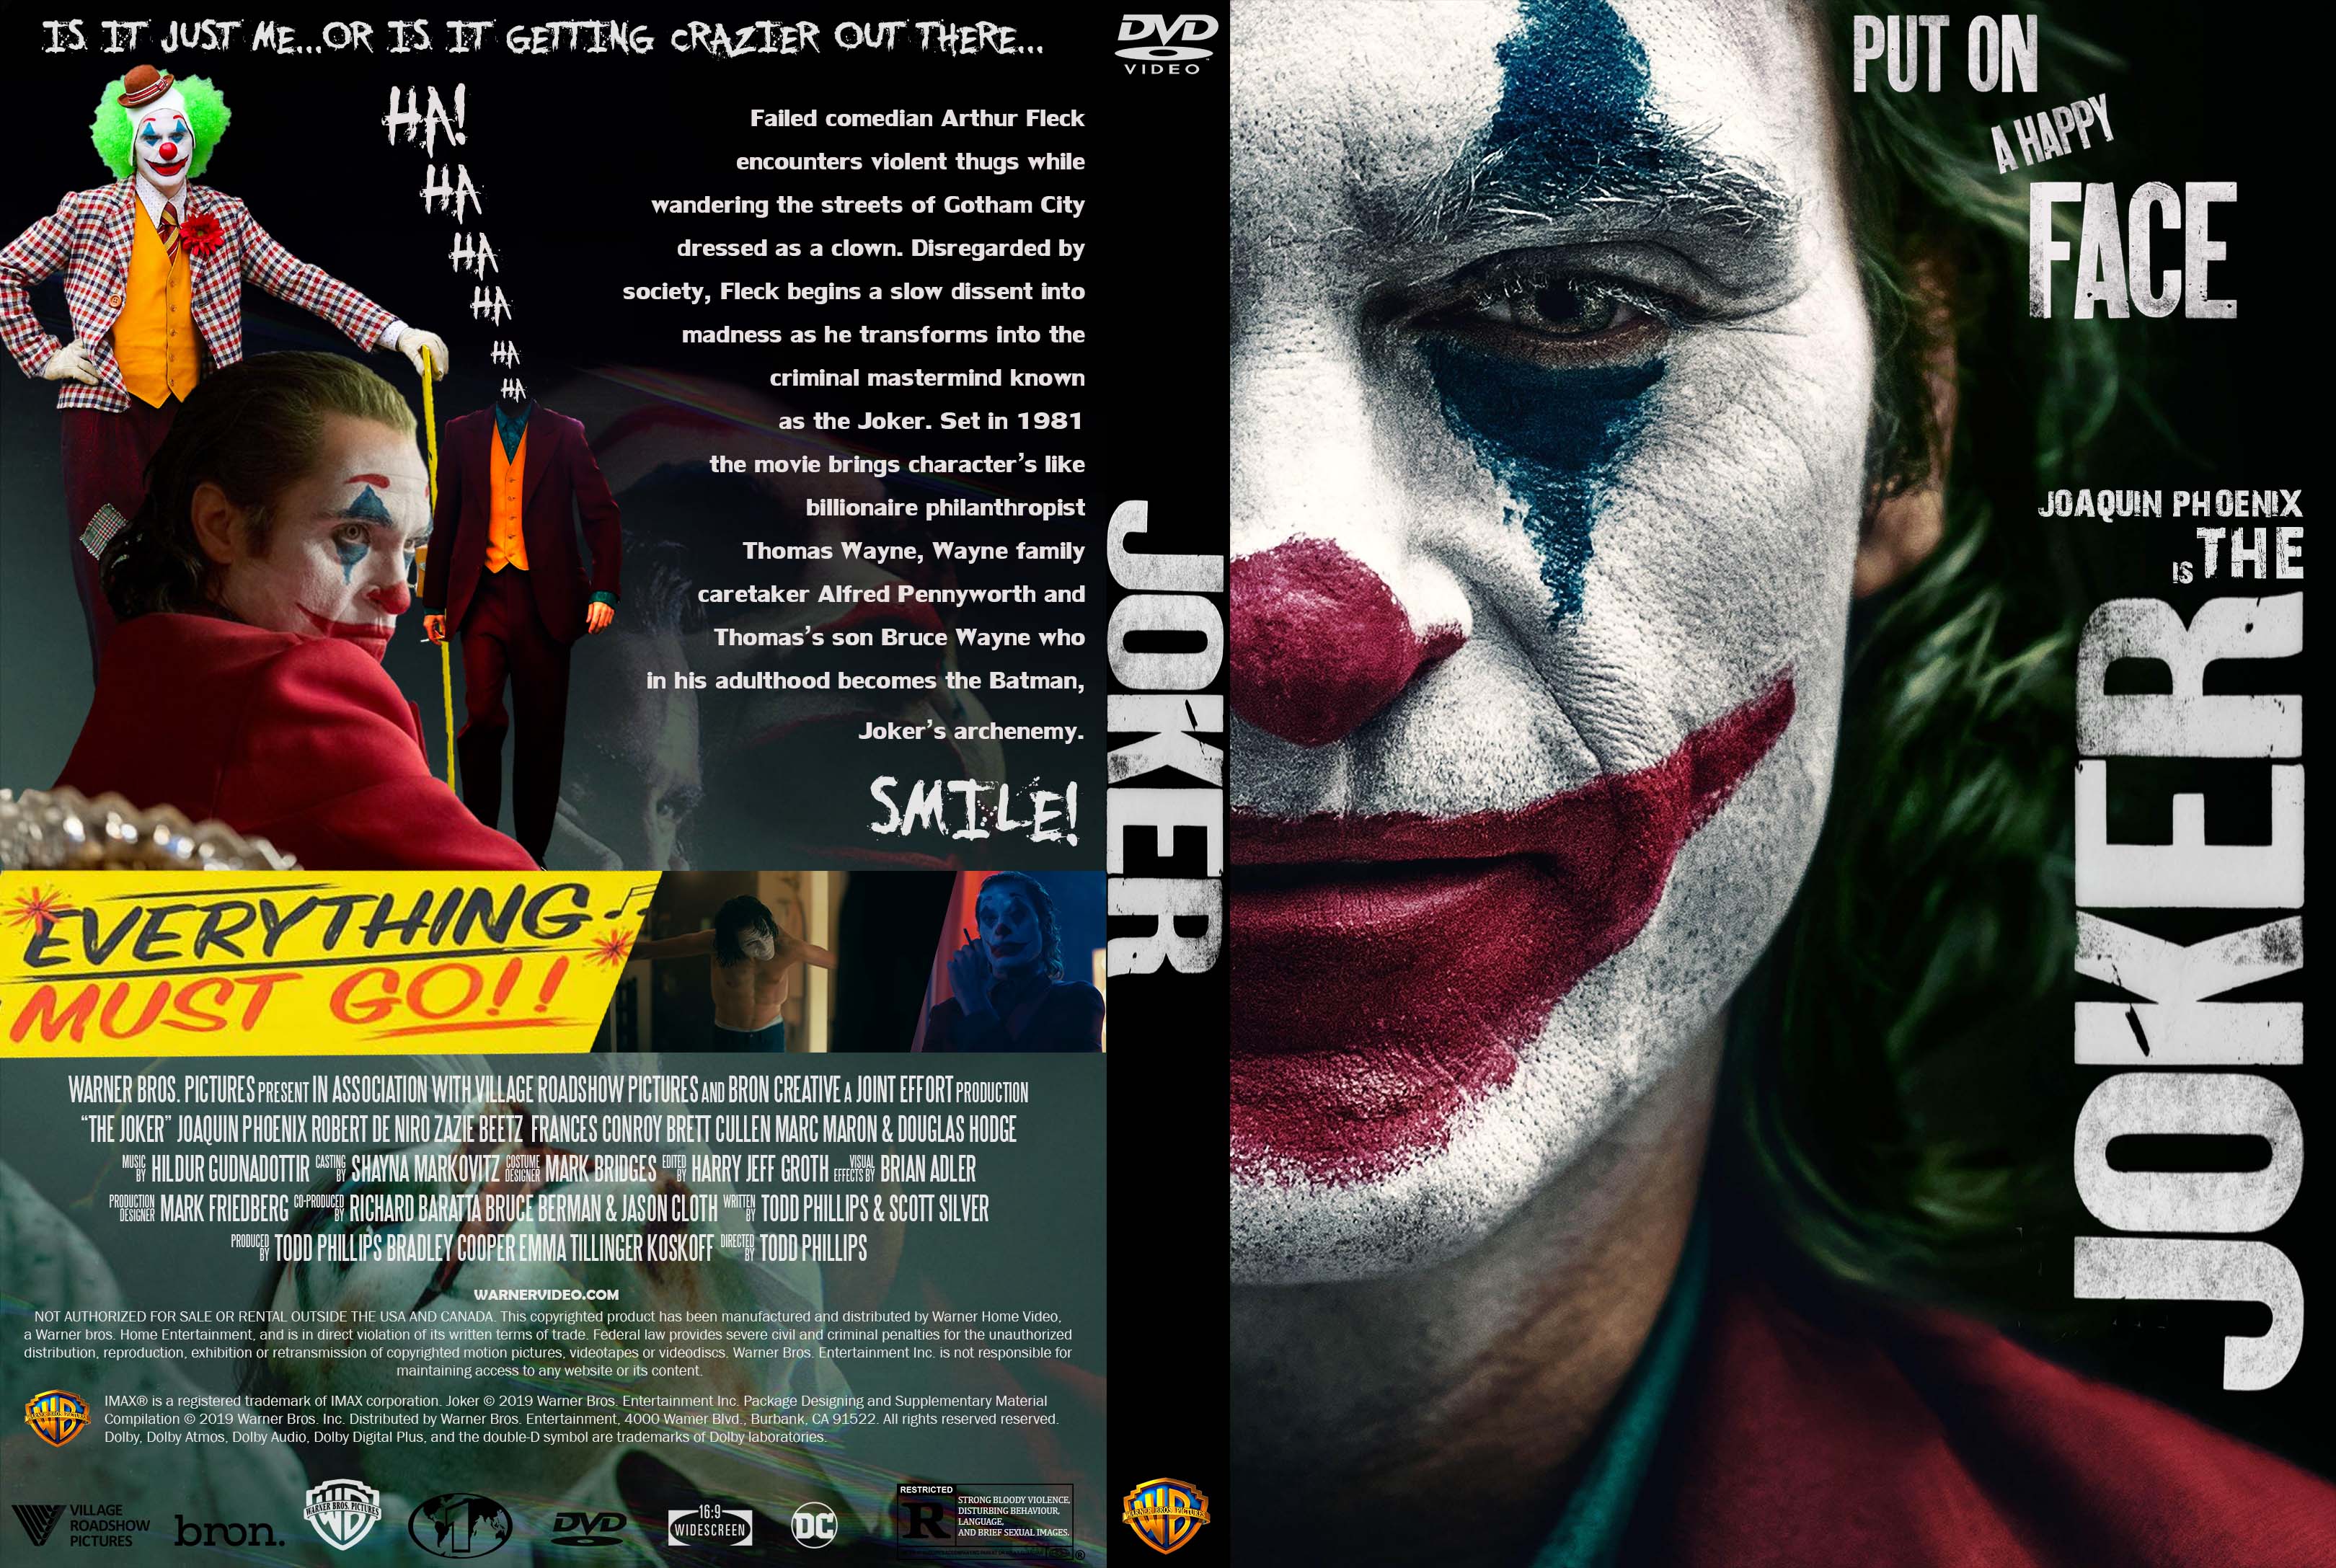 Joker (2019) : Front, DVD Covers, Cover Century